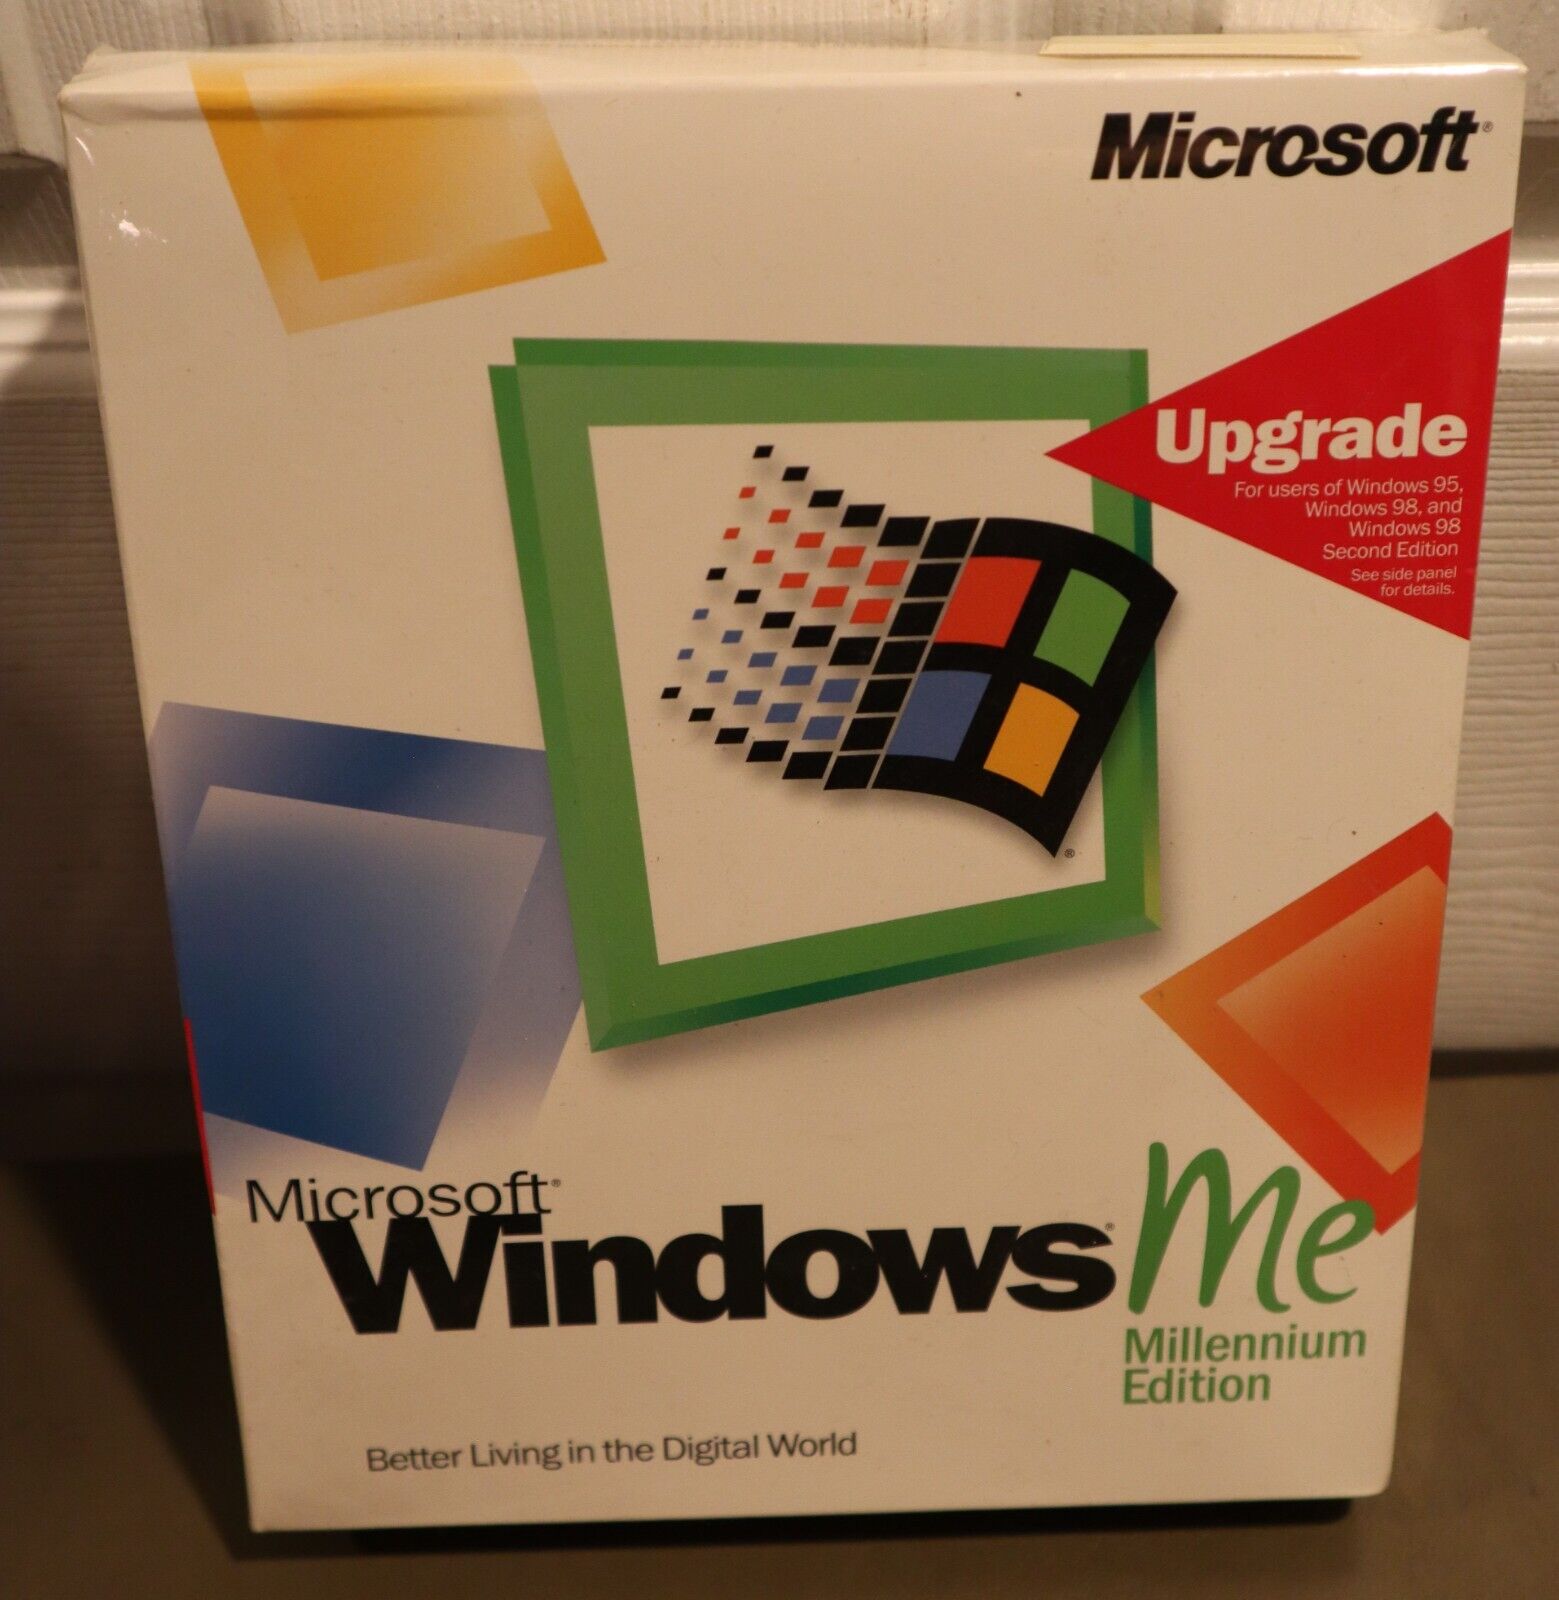 NEW & SEALED - Microsoft Windows ME Millennium Edition Upgrade US/Canada Version